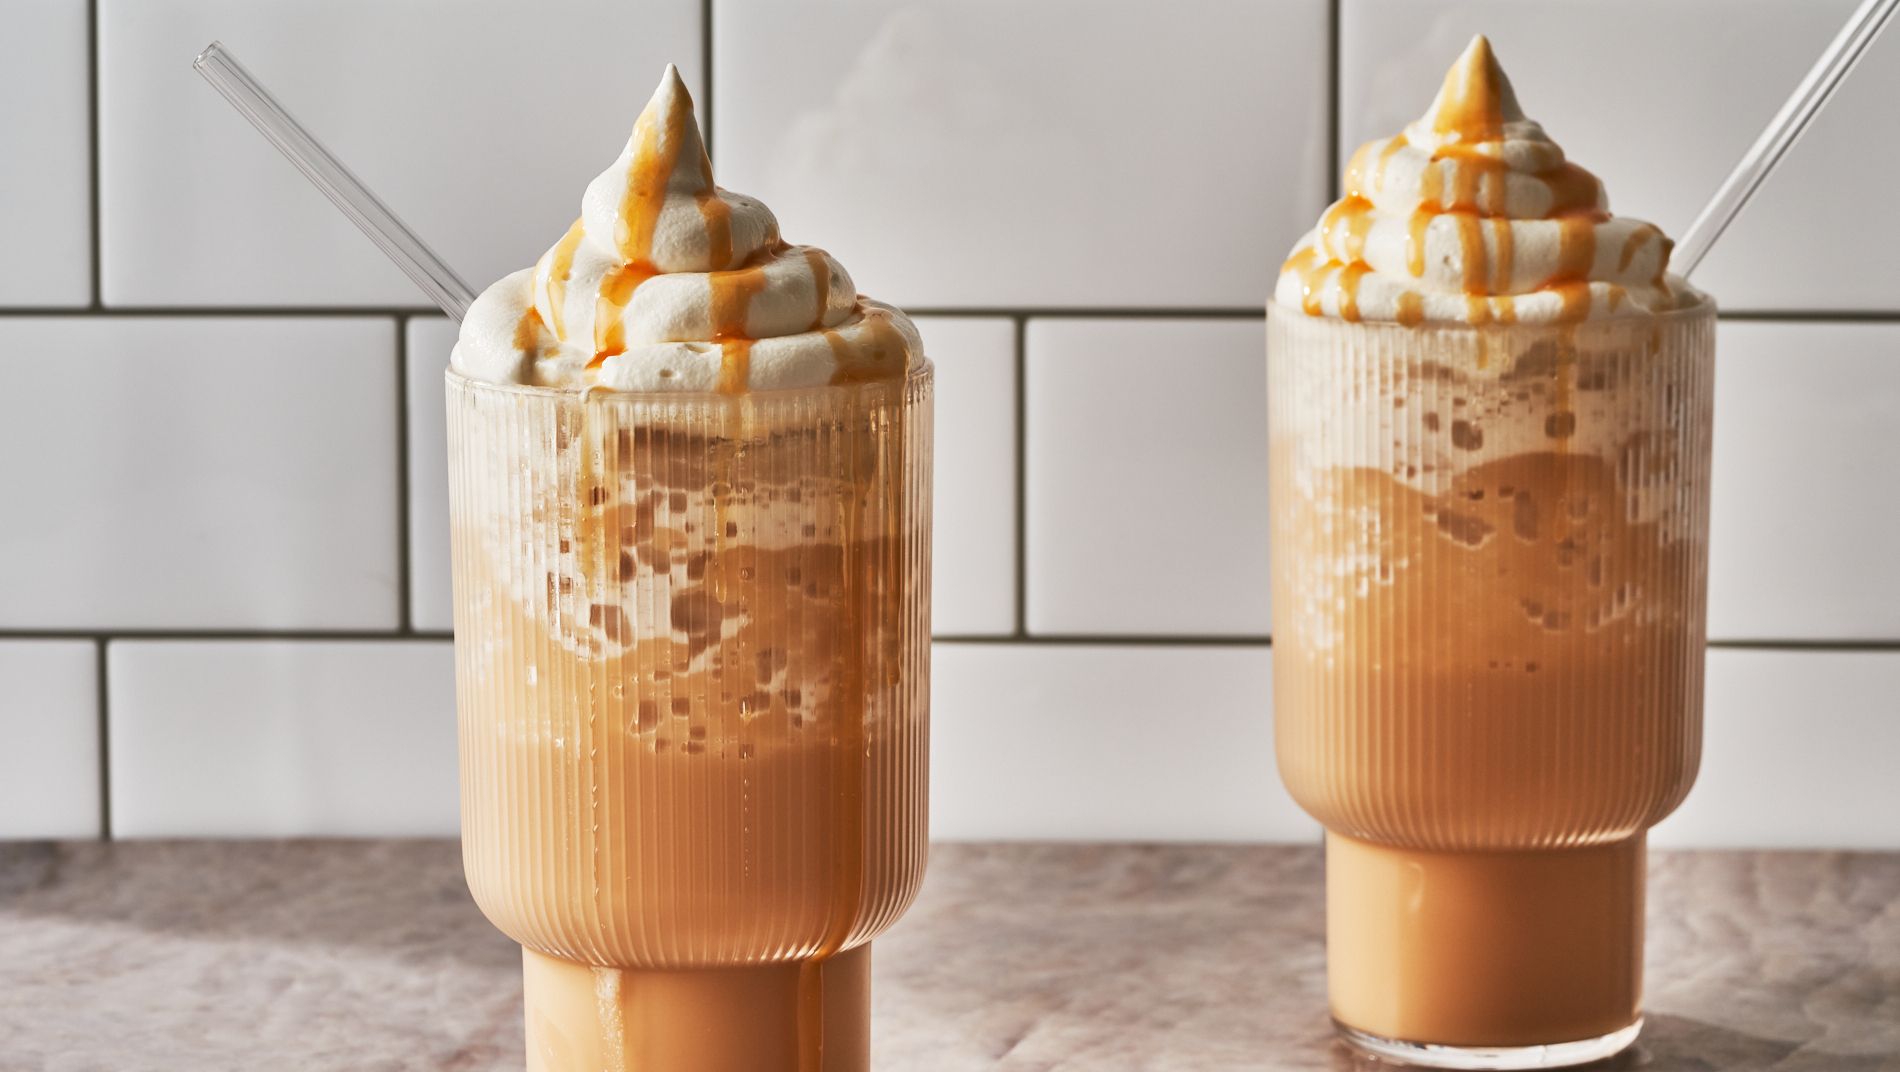 Caramel Latte Recipe (video) - Easy Starbucks Copycat Drink